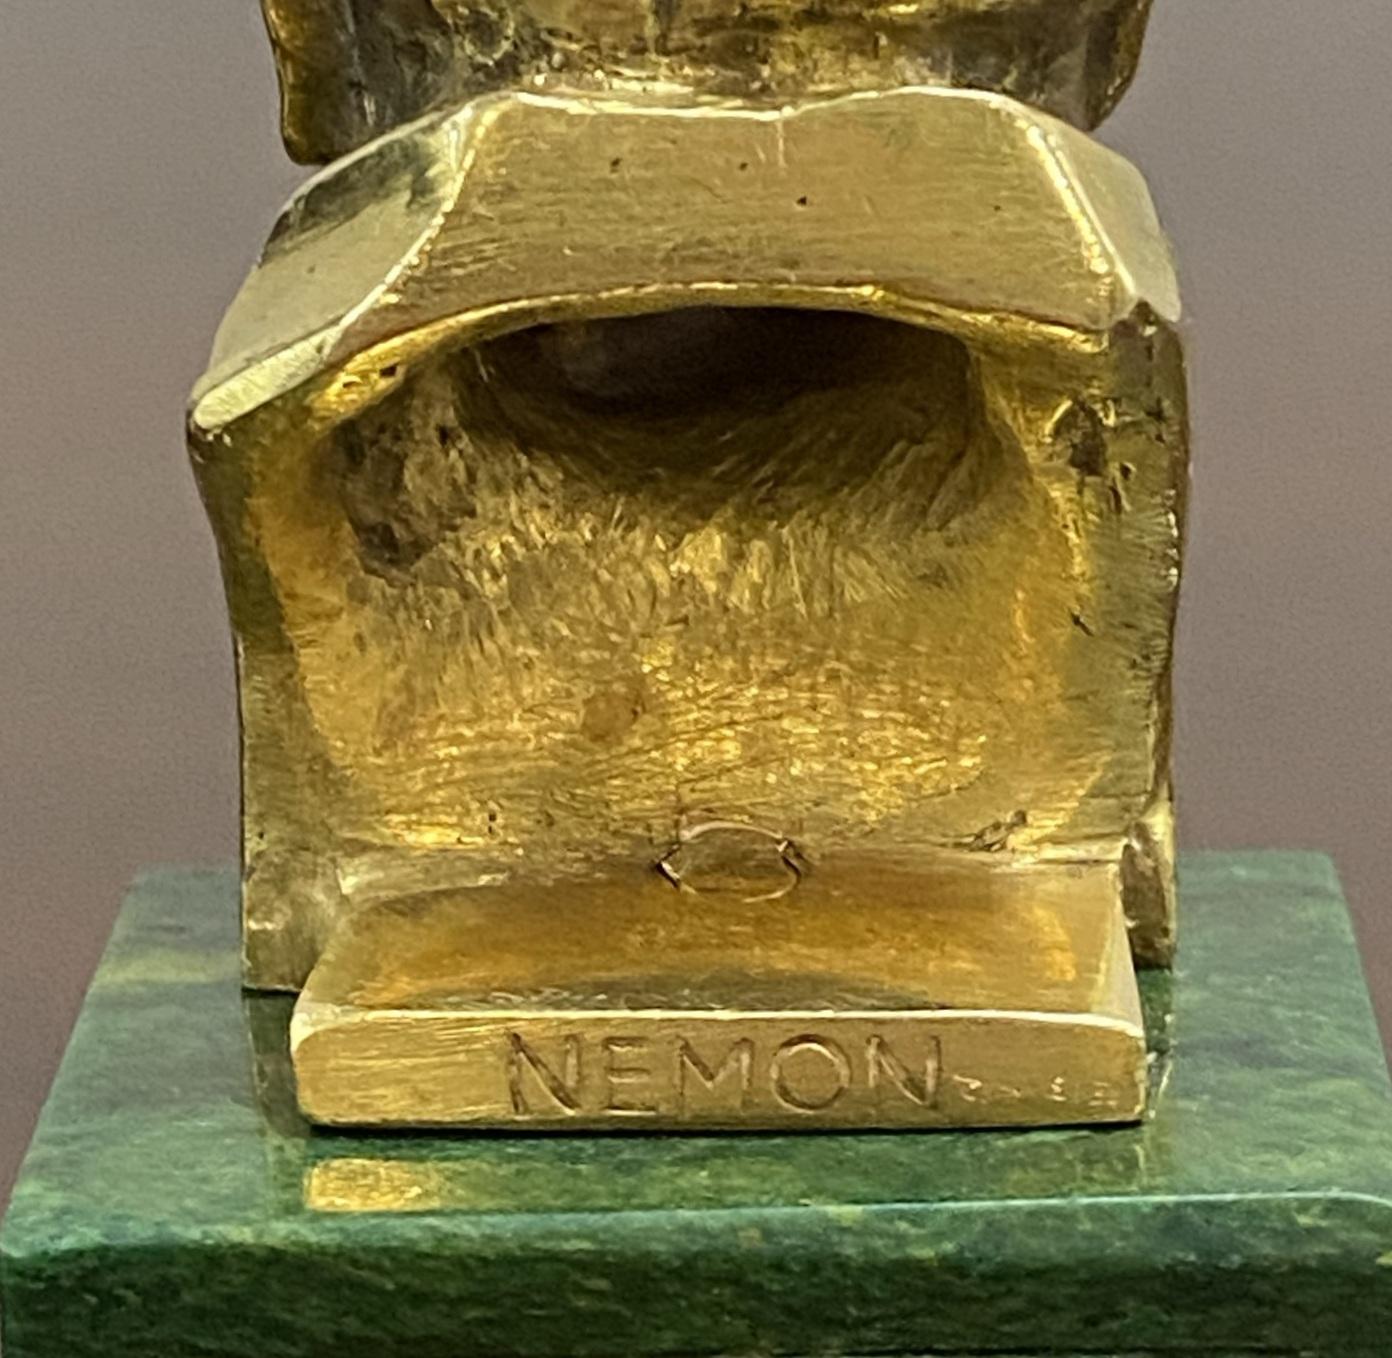 Rare Asprey & Co Oscar Nemon 1967 18ct Gold Minature Bust of Winston Churchill For Sale 8